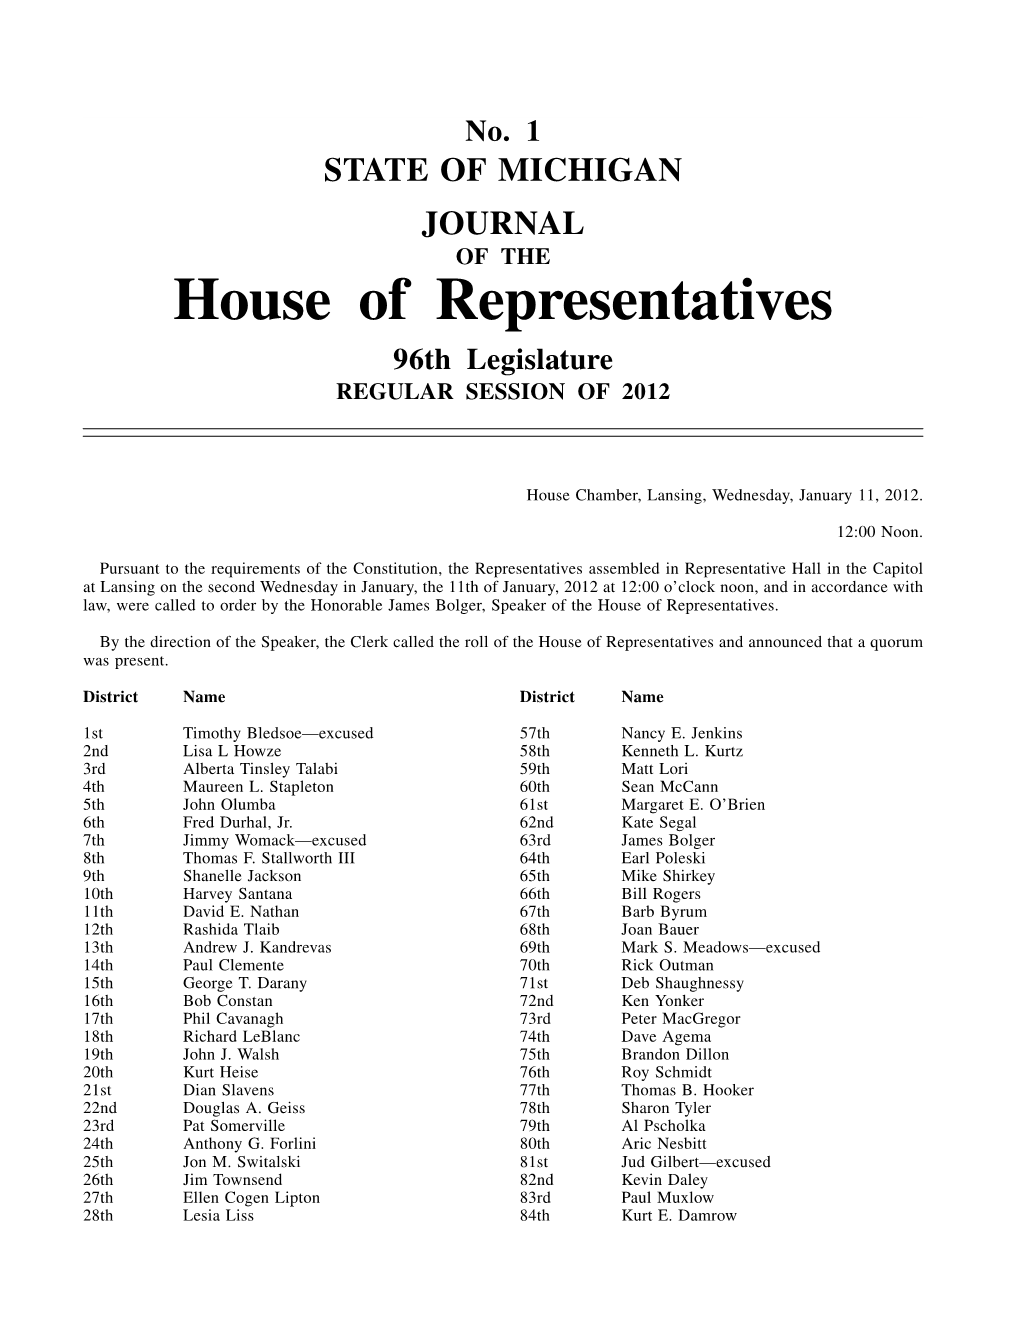 House of Representatives 96Th Legislature REGULAR SESSION of 2012